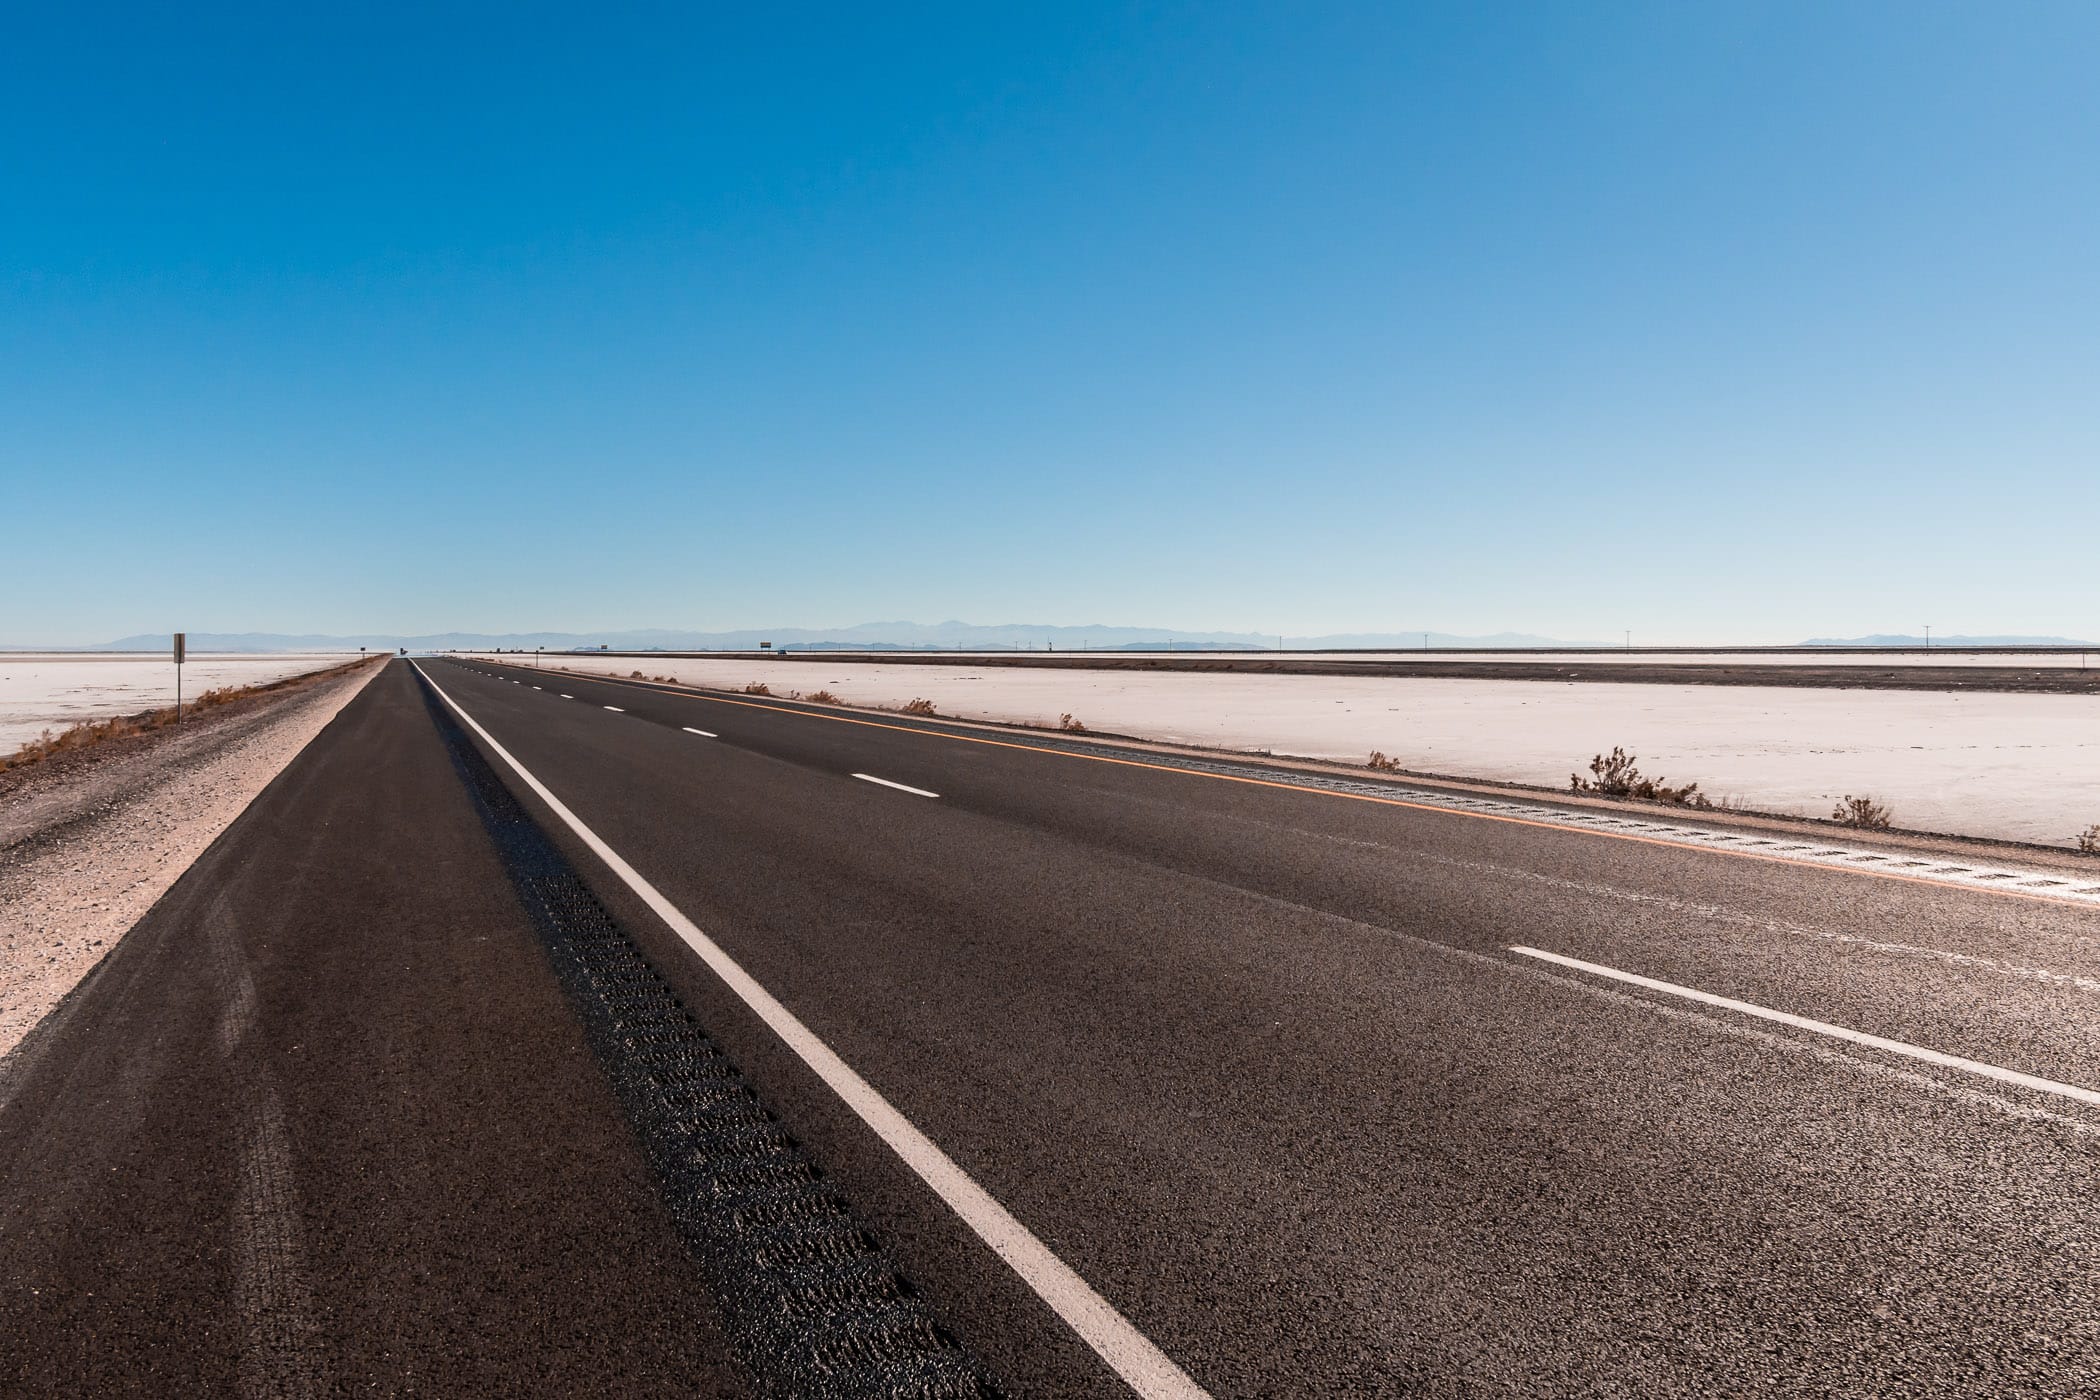 Interstate 80 traverses the arid expanse of the Bonneville Salt Flats, Utah.